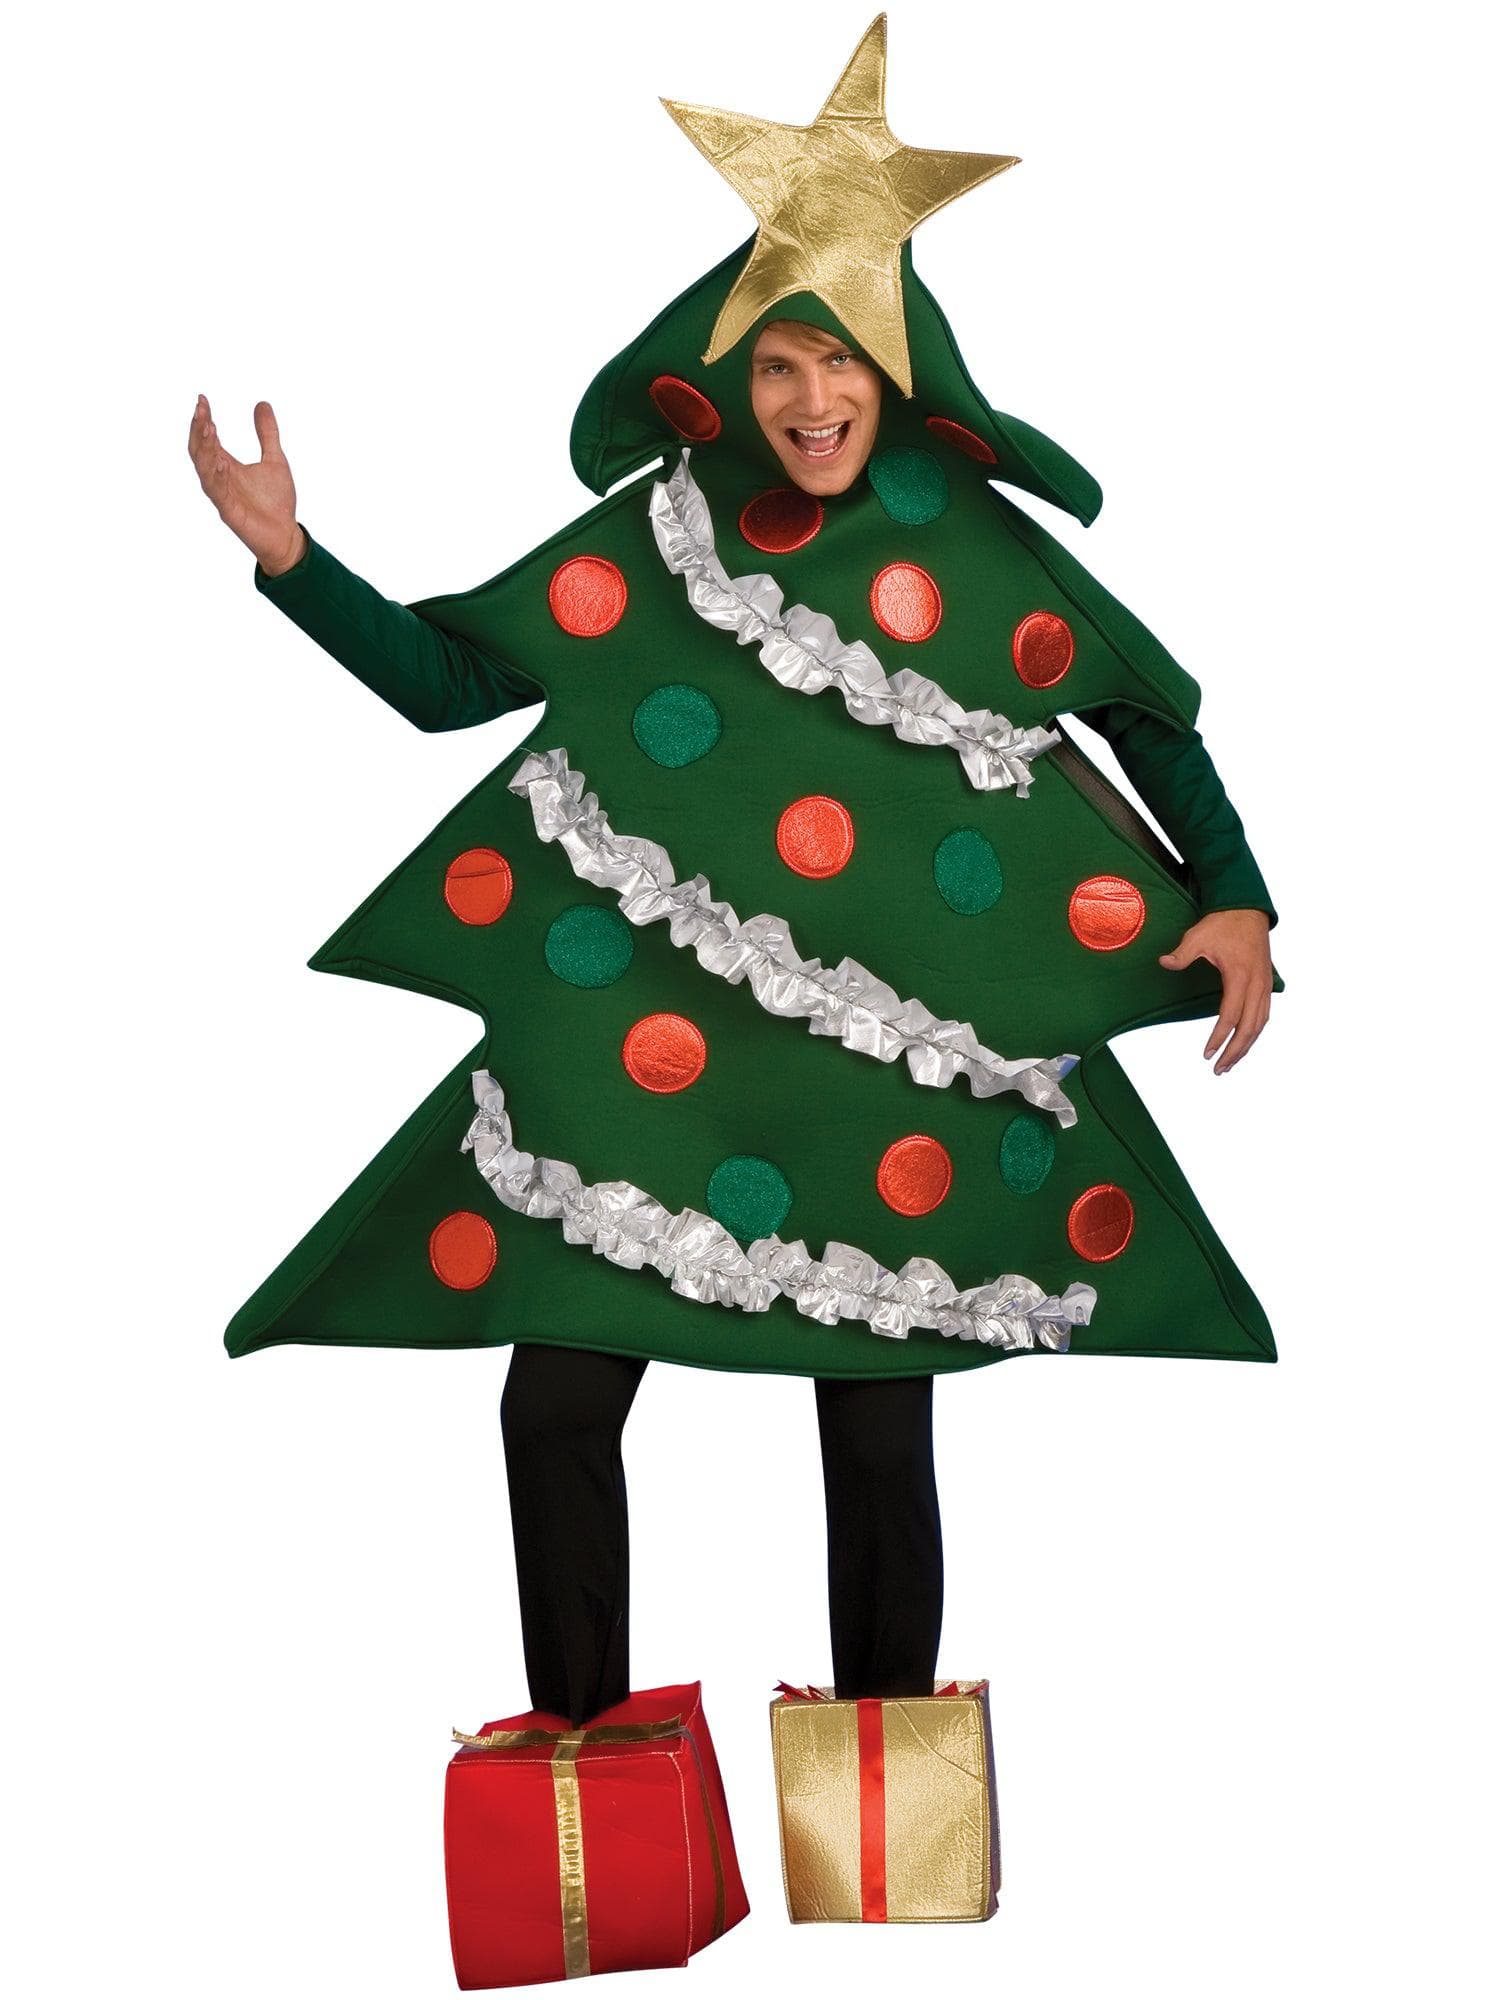 Adult Christmas Tree Costume - costumes.com